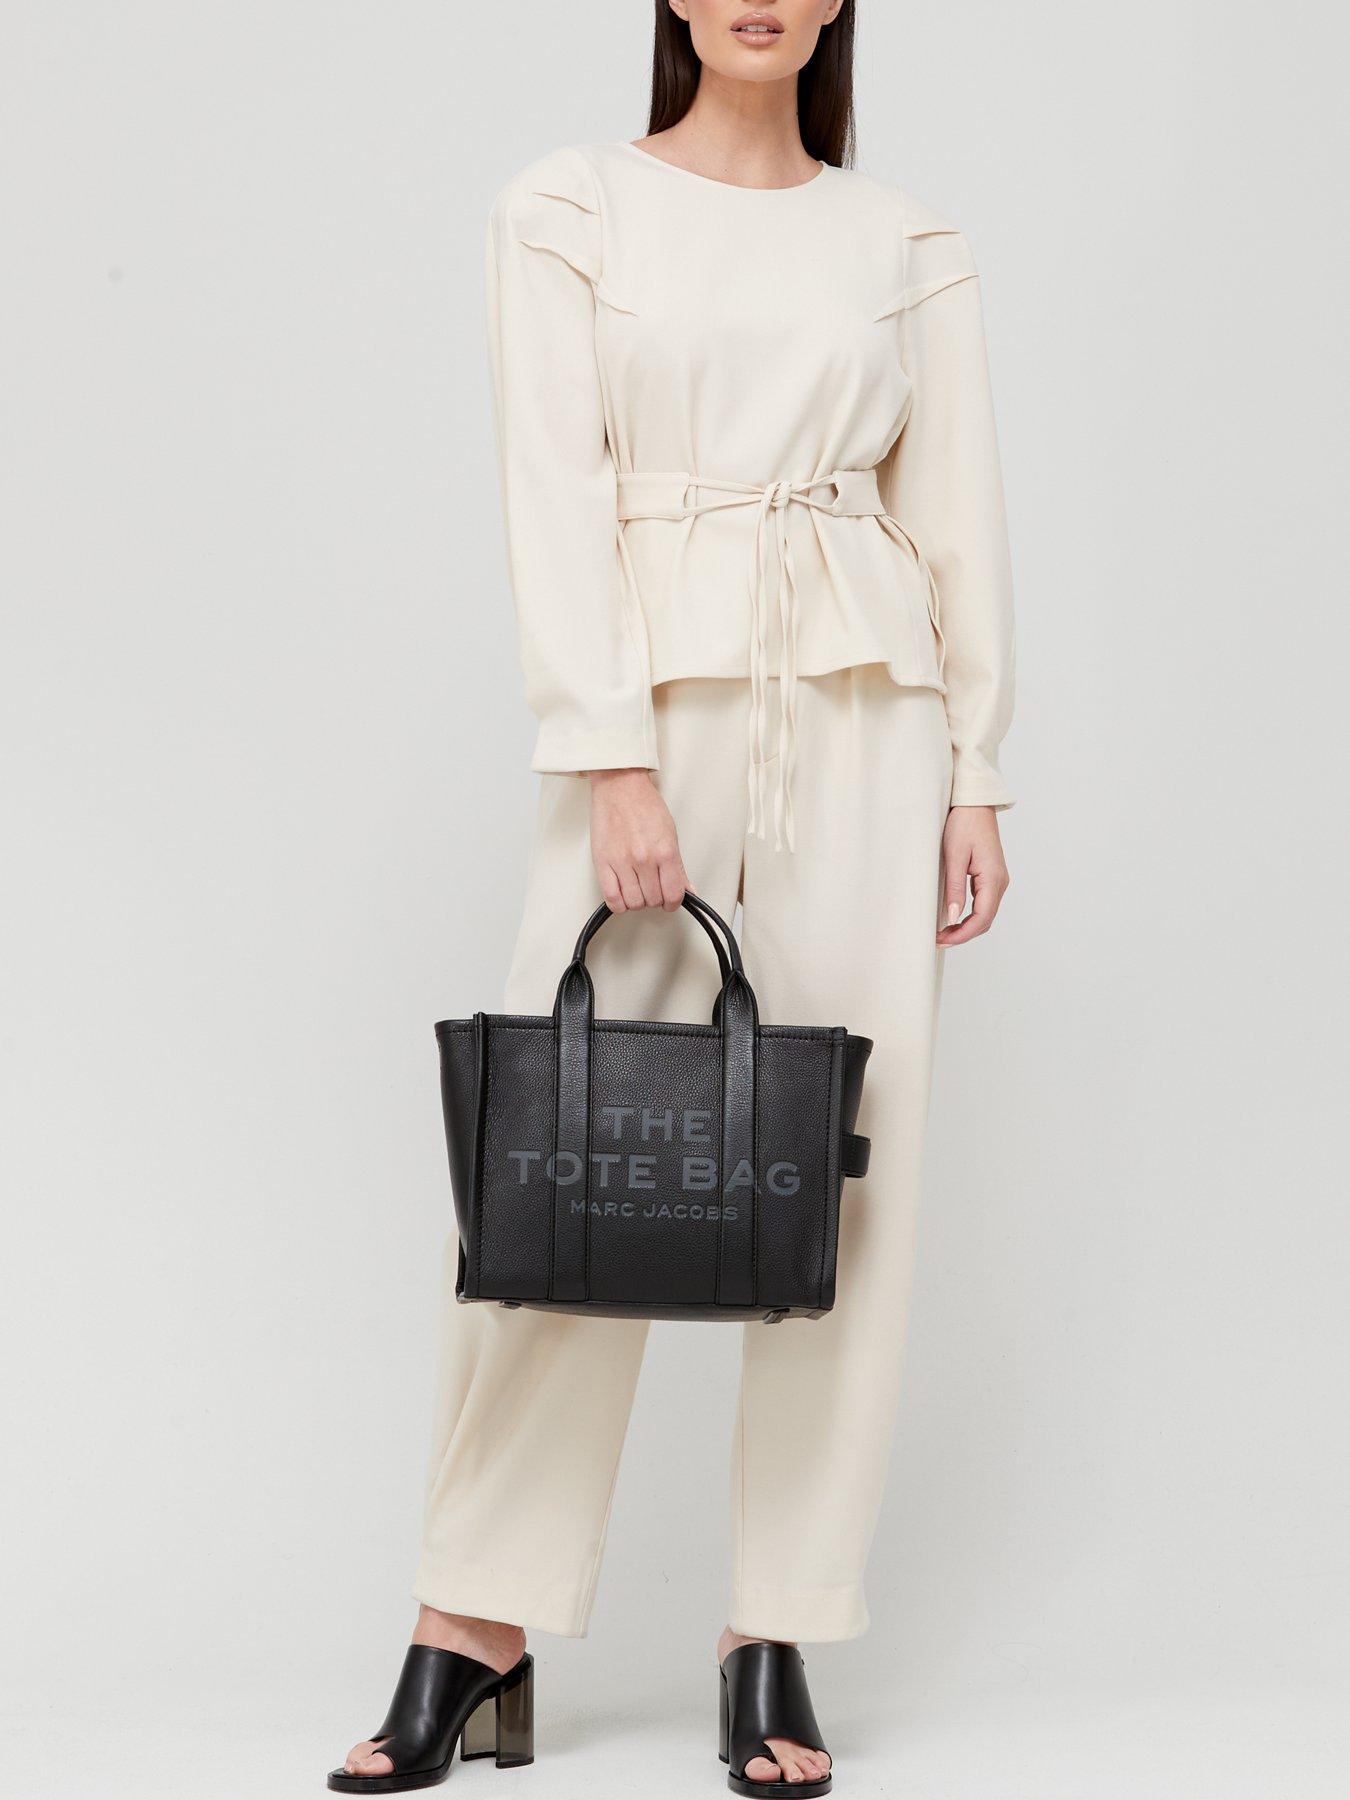 Marc Jacobs Black Leather Bag  Leather handbags, Black leather bags,  Leather